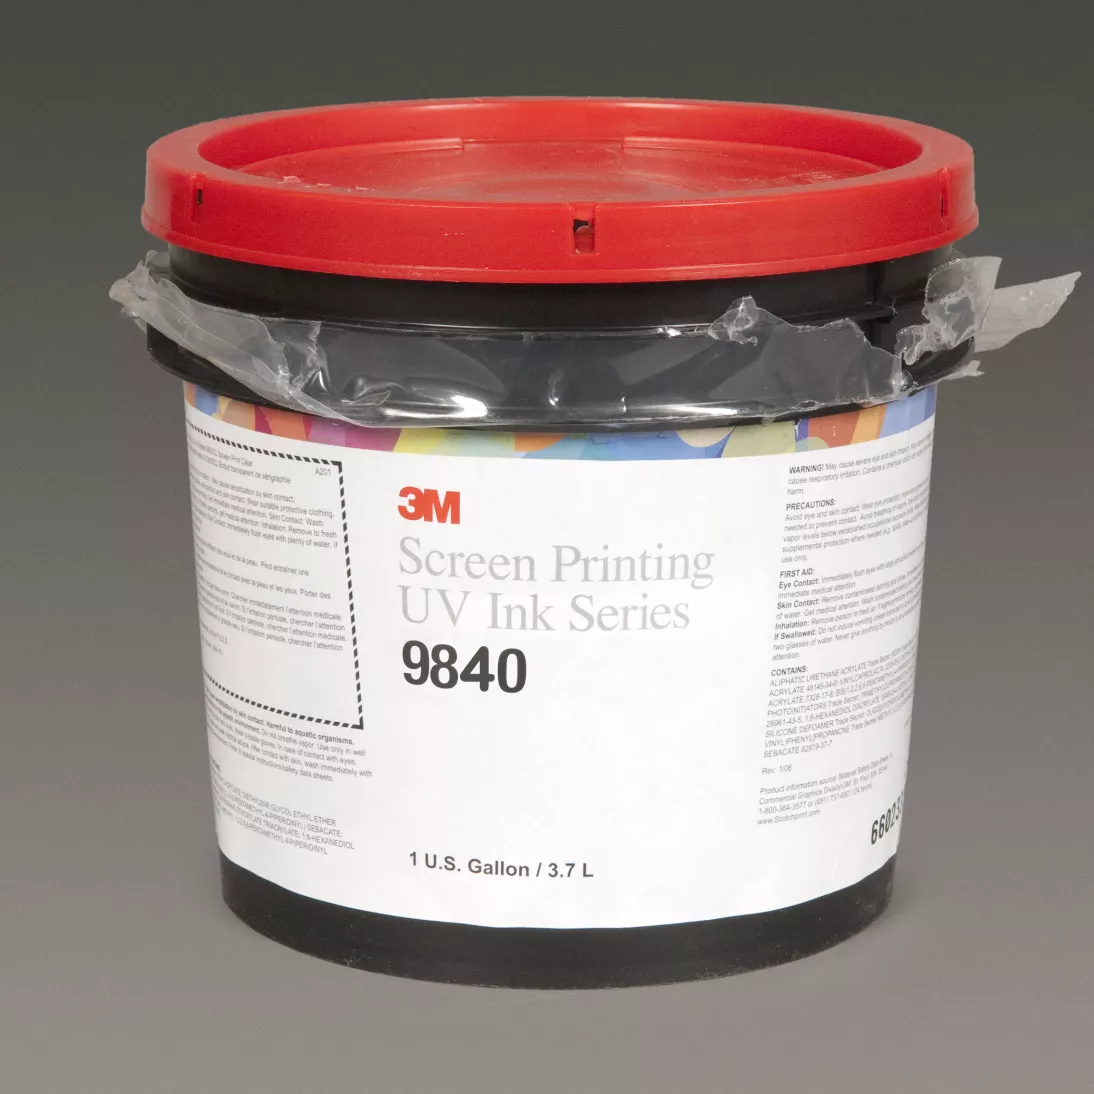 3M™ Screen Printing UV Ink 9840, Transparent Medium Yellow, 1 Gallon
Container